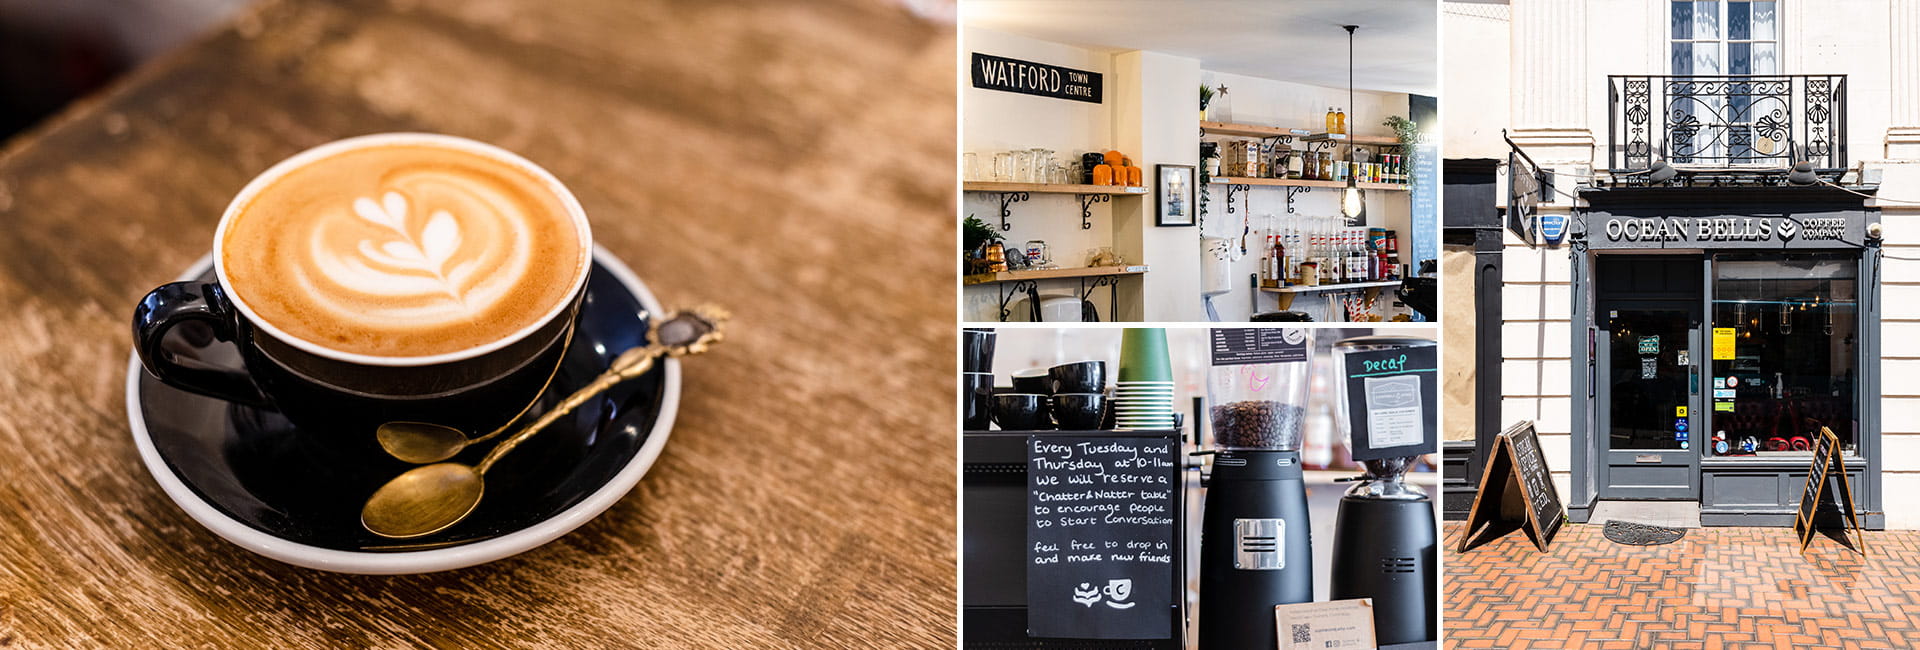 Berkeley Inspiration - In Conversation with Ocean Bells Coffee Shop in Watford